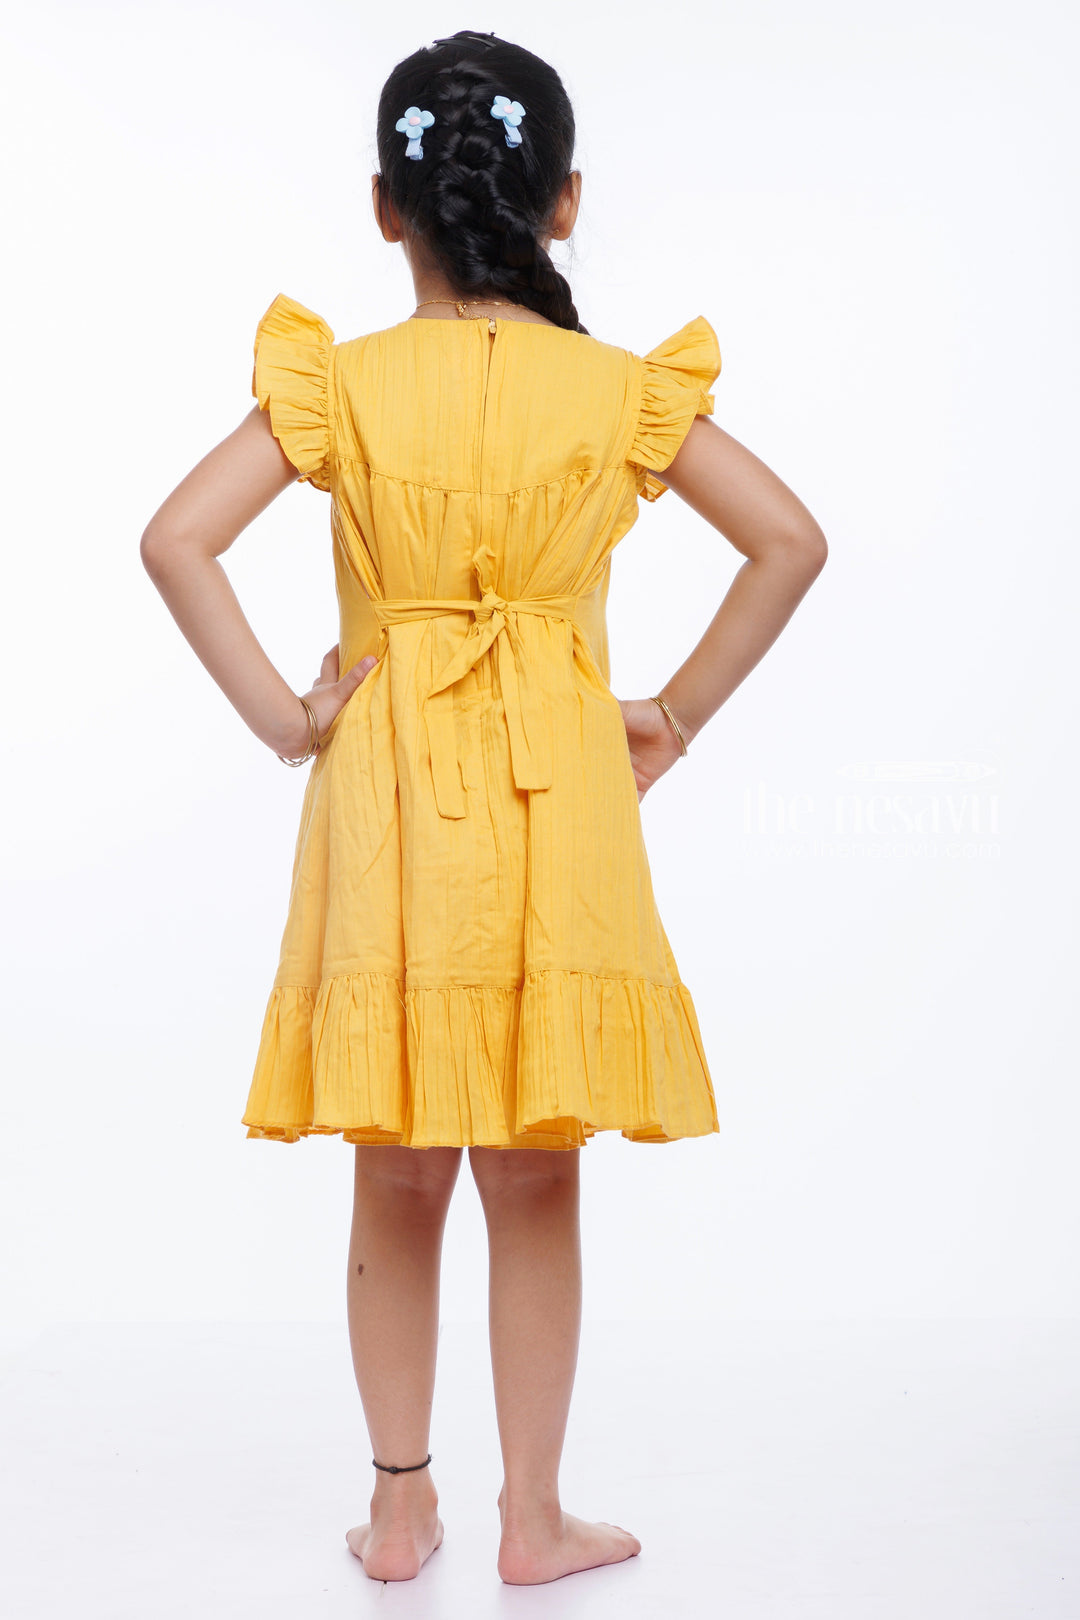 The Nesavu Girls Cotton Frock Girls Mustard Yellow Cotton Dress with Embroidery - A Summer Delight Nesavu Bright Mustard Yellow Embroidered Cotton Dress for Girls | Chic Summer Collection | The Nesavu